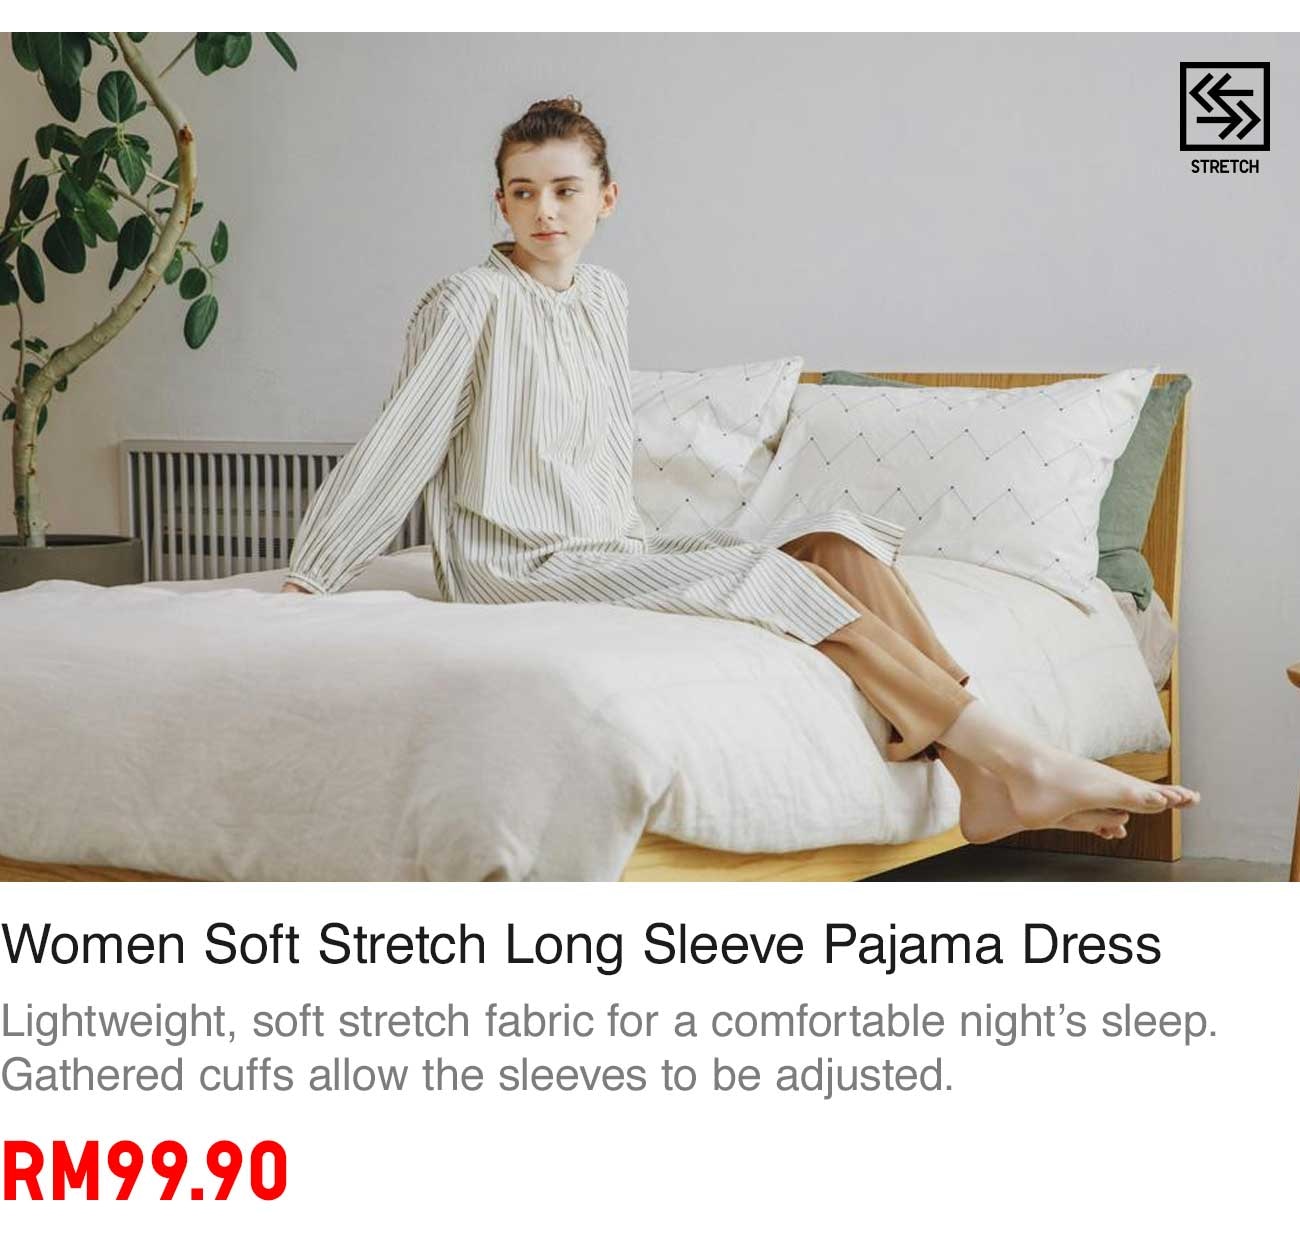 WOMEN SOFT STRETCH LONG SLEEVE PAJAMA DRESS